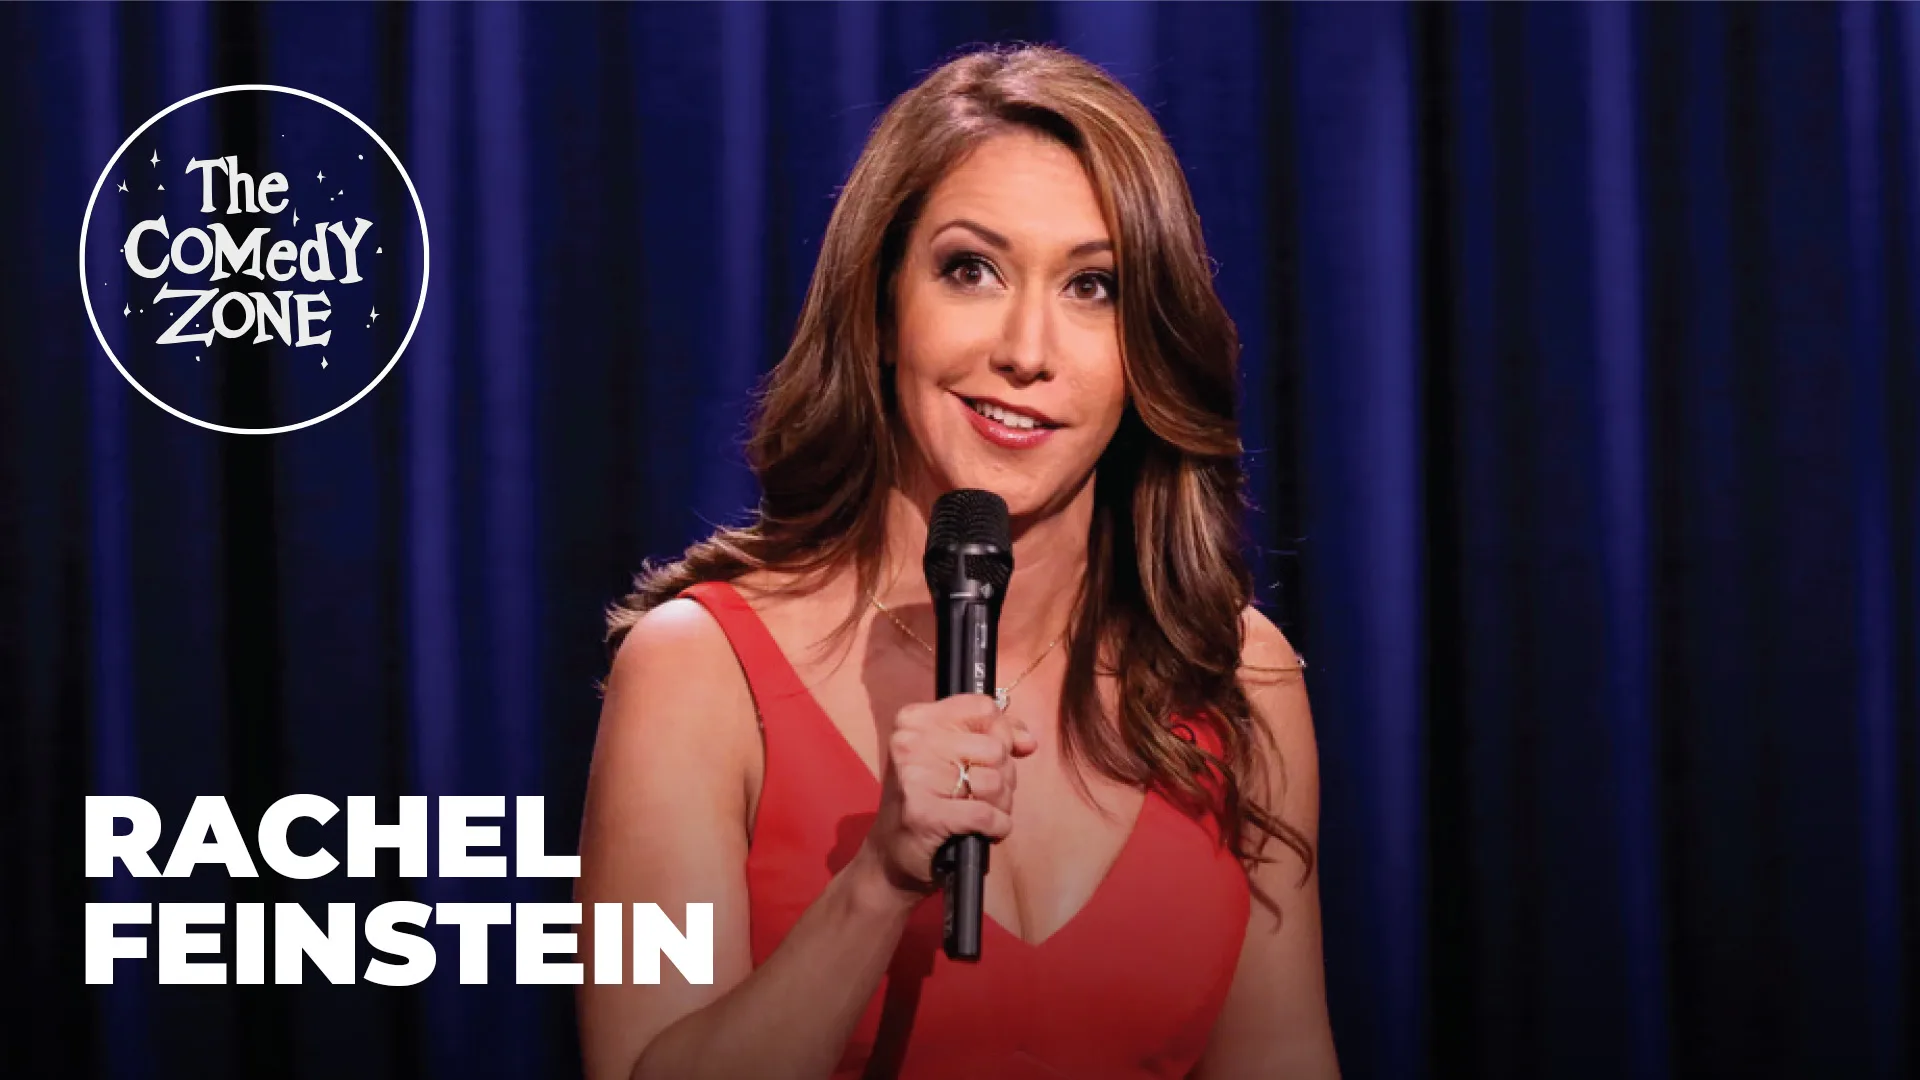 Comedy Zone presents Rachel Feinstein